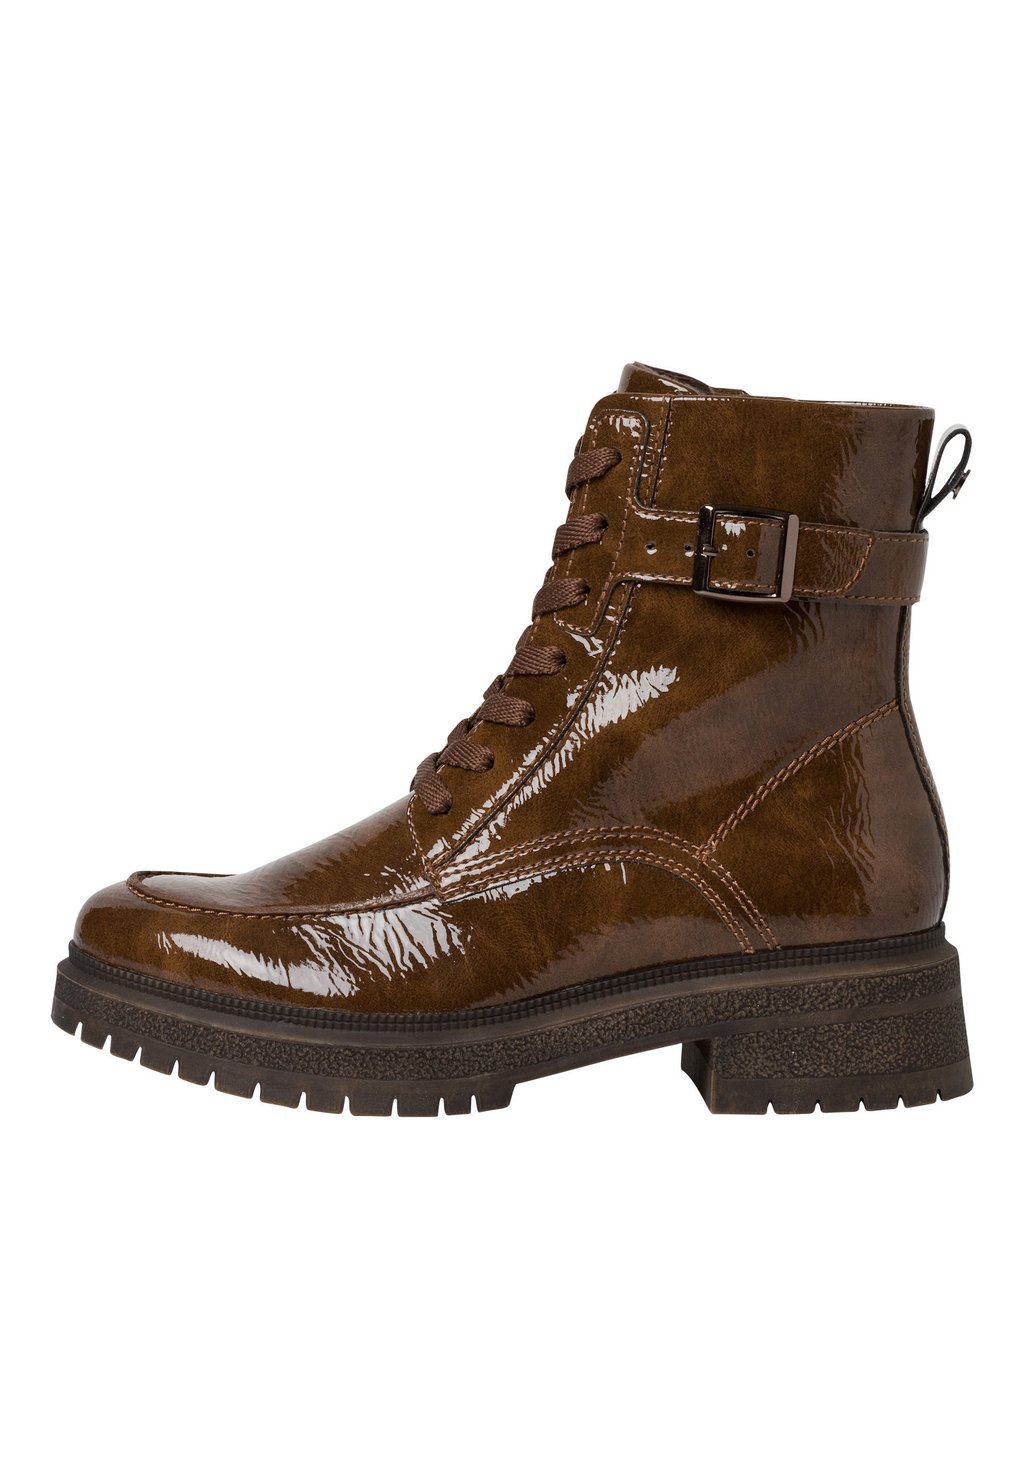 Ботинки на шнуровке Tamaris, коричневый ботинки на шнурках женские tamaris коричневый 38